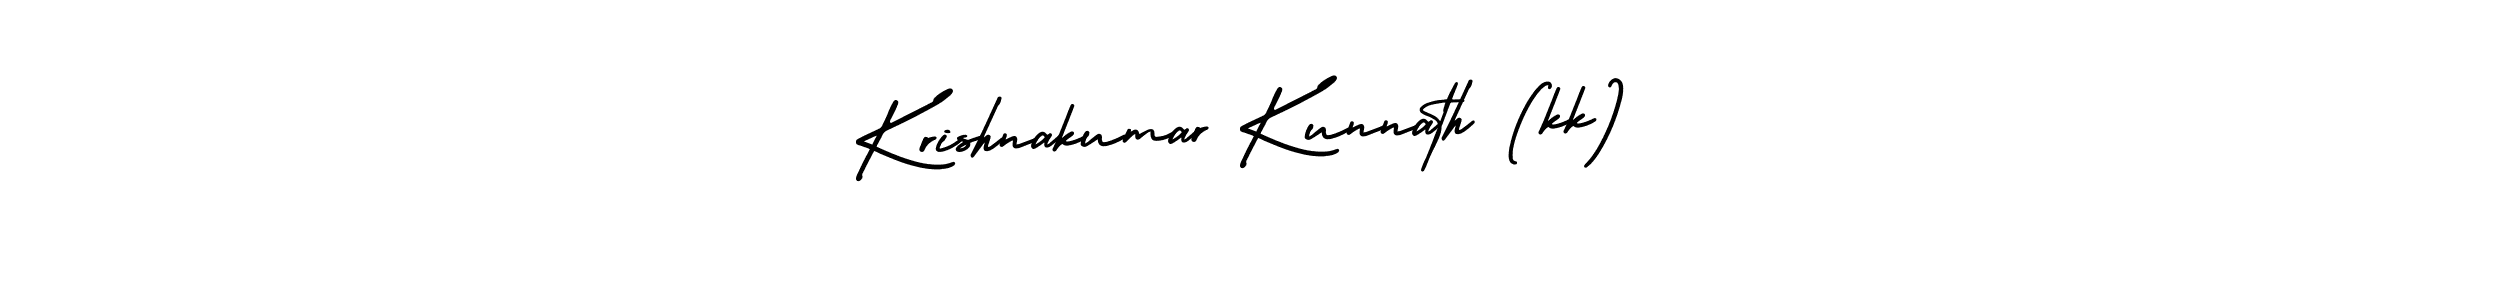 Best and Professional Signature Style for Krishnakumar Kunnath (kk). AmerikaSignatureDemo-Regular Best Signature Style Collection. Krishnakumar Kunnath (kk) signature style 3 images and pictures png